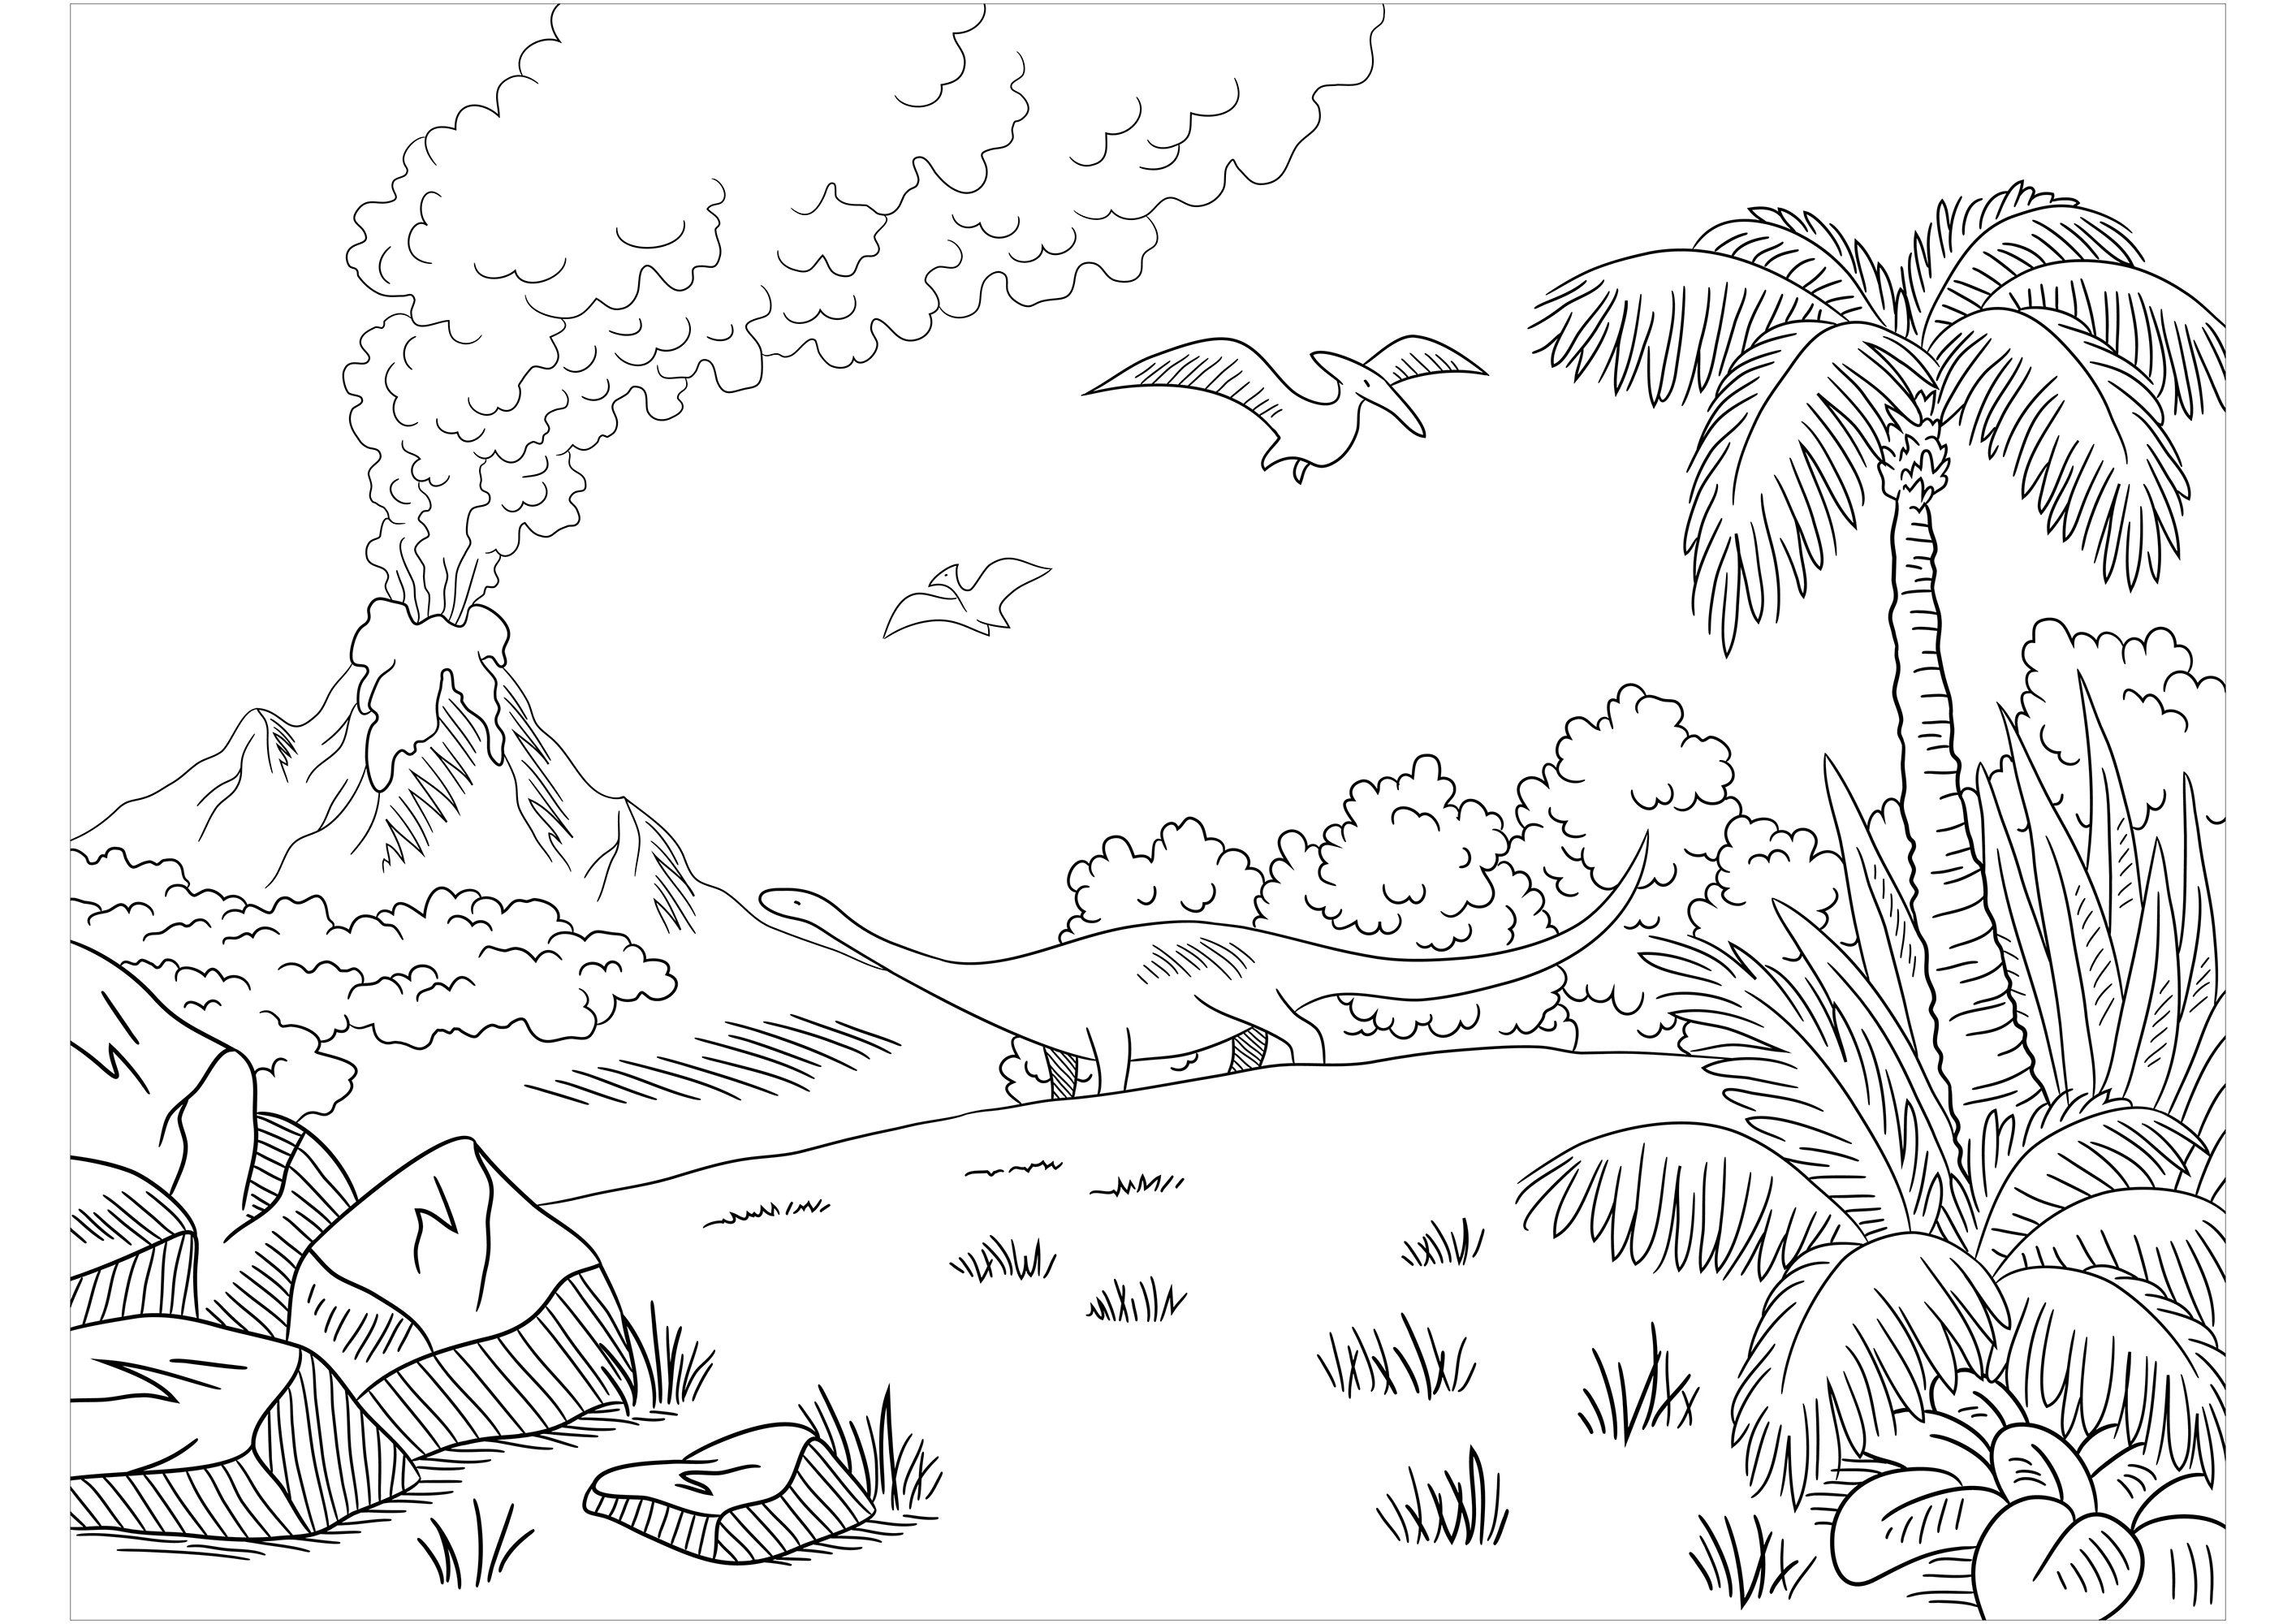 Diplodocus and Velociraptor, fuyant un volcan en éruption